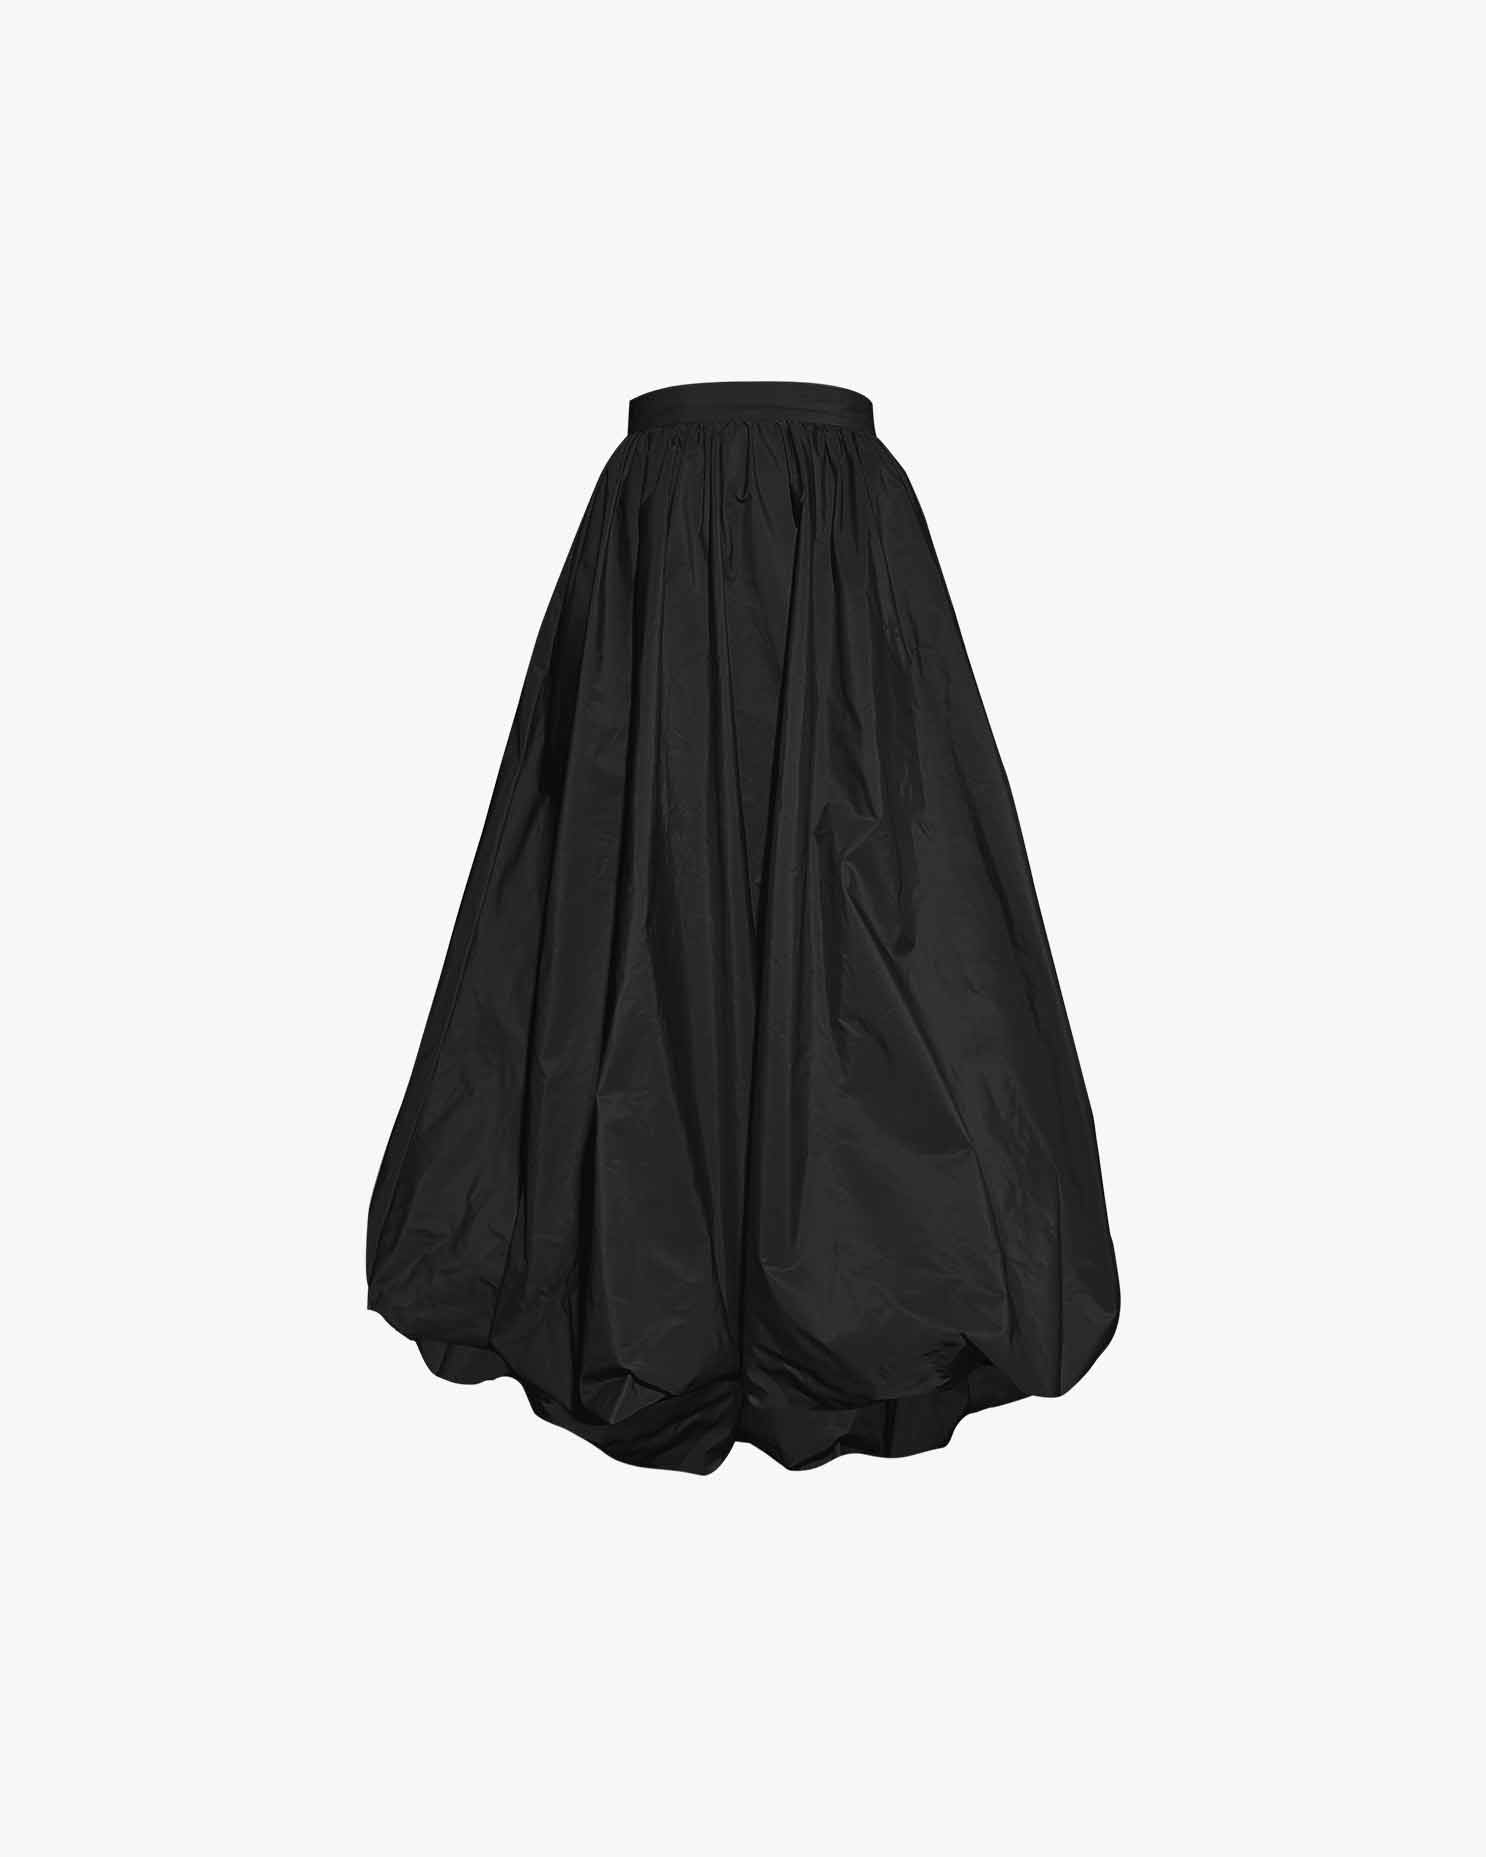 San Bernardino puffball skirt black